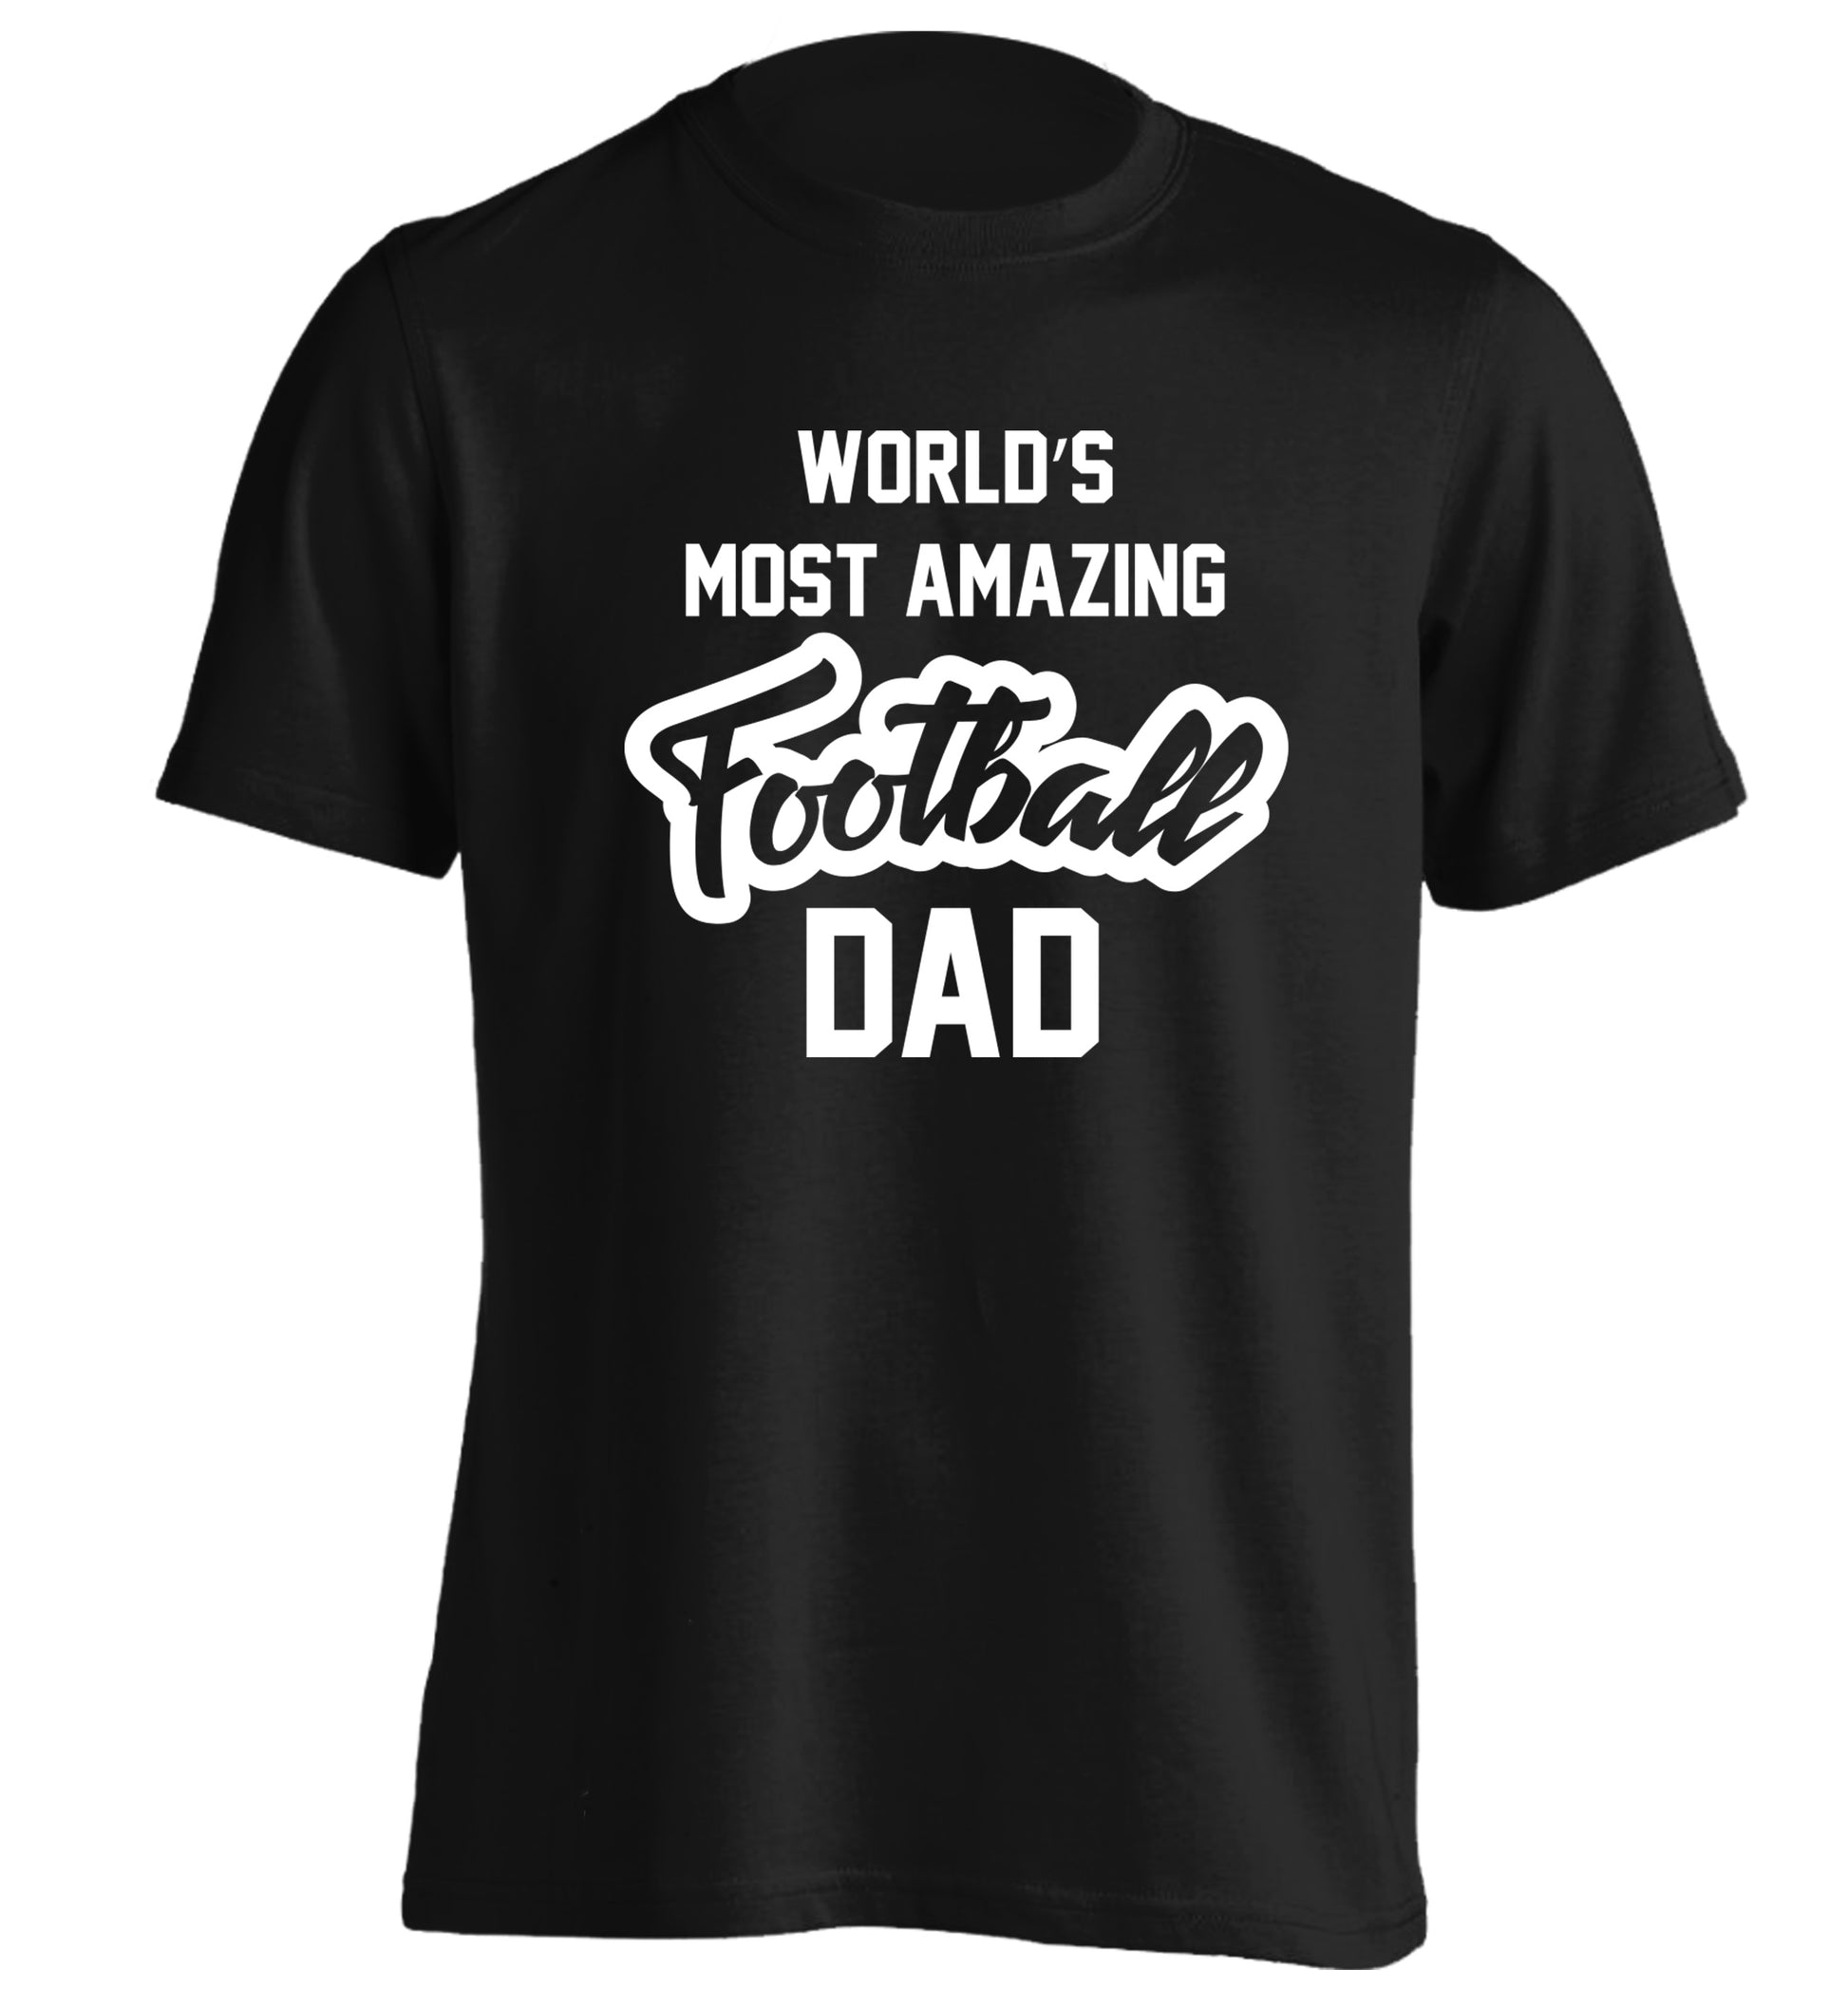 Worlds most amazing football dad adults unisexblack Tshirt 2XL